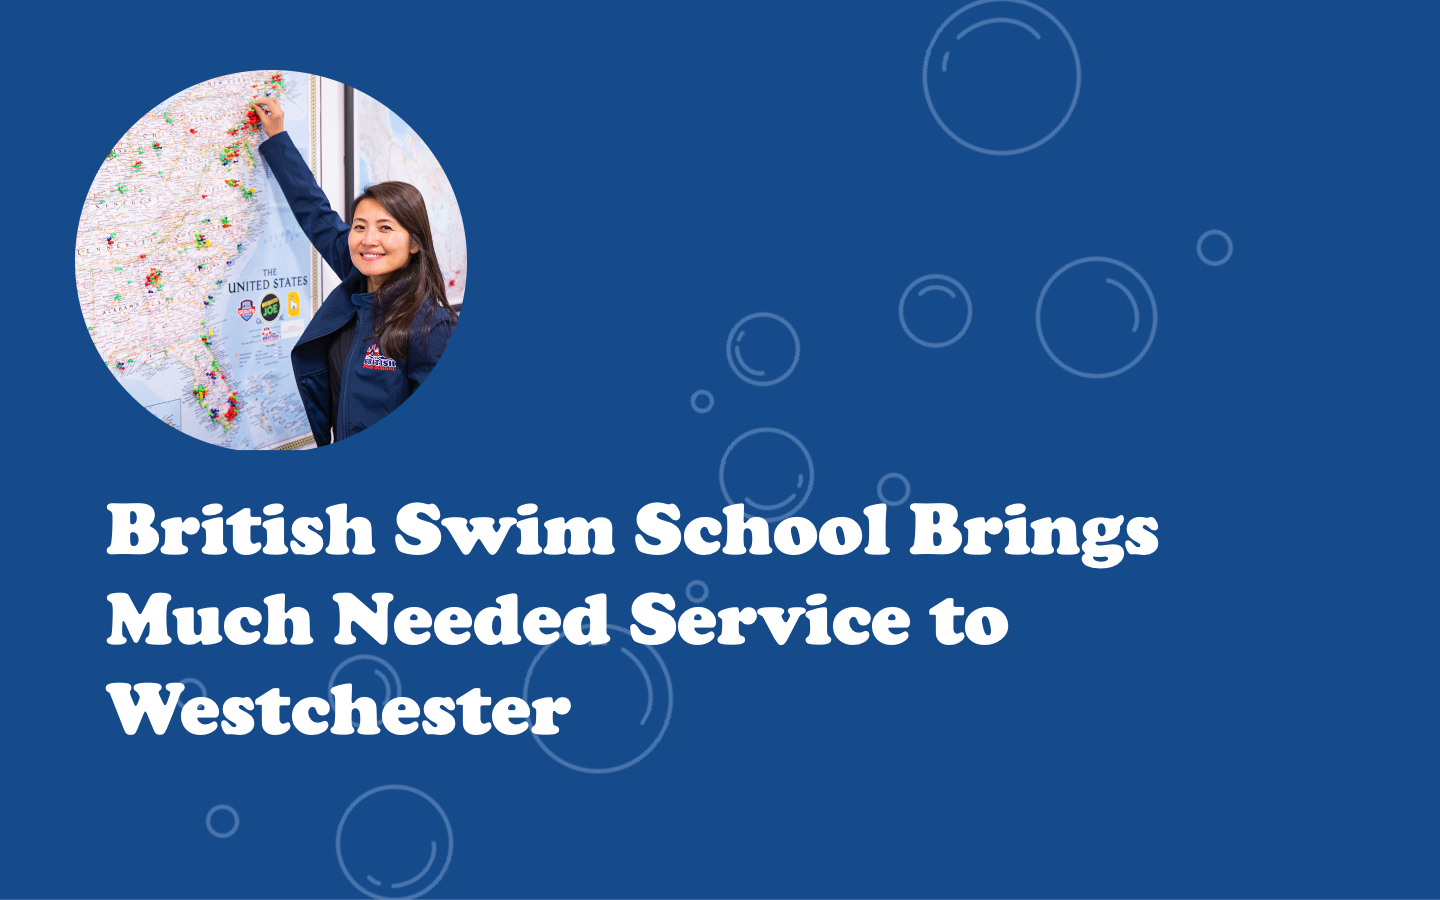 Image of British Swim School Brings Much Needed Service to Westchester